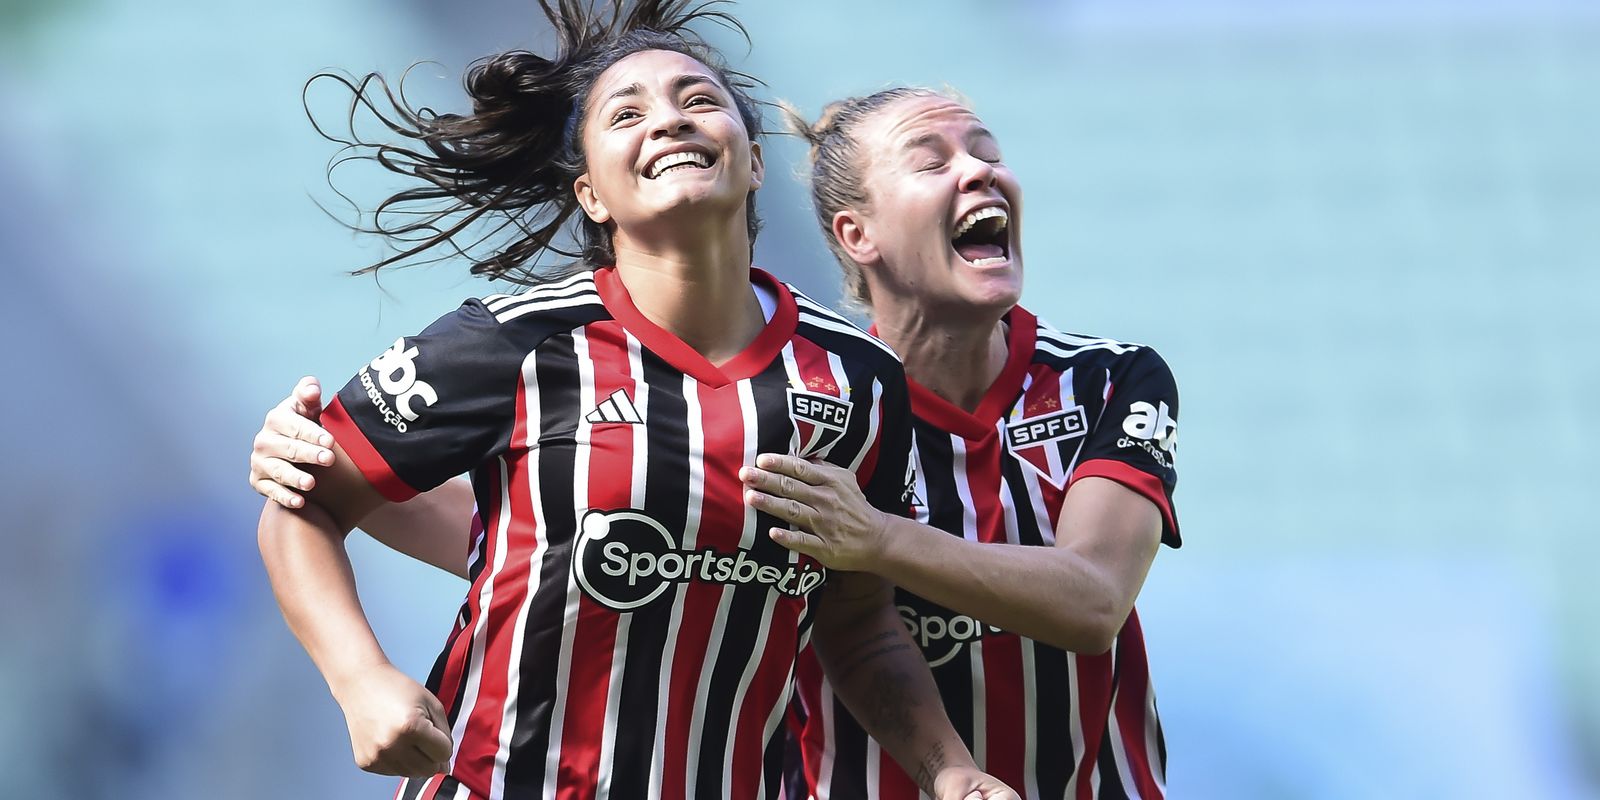 Paulista Feminino terá clássicos nas semifinais: Corinthians x